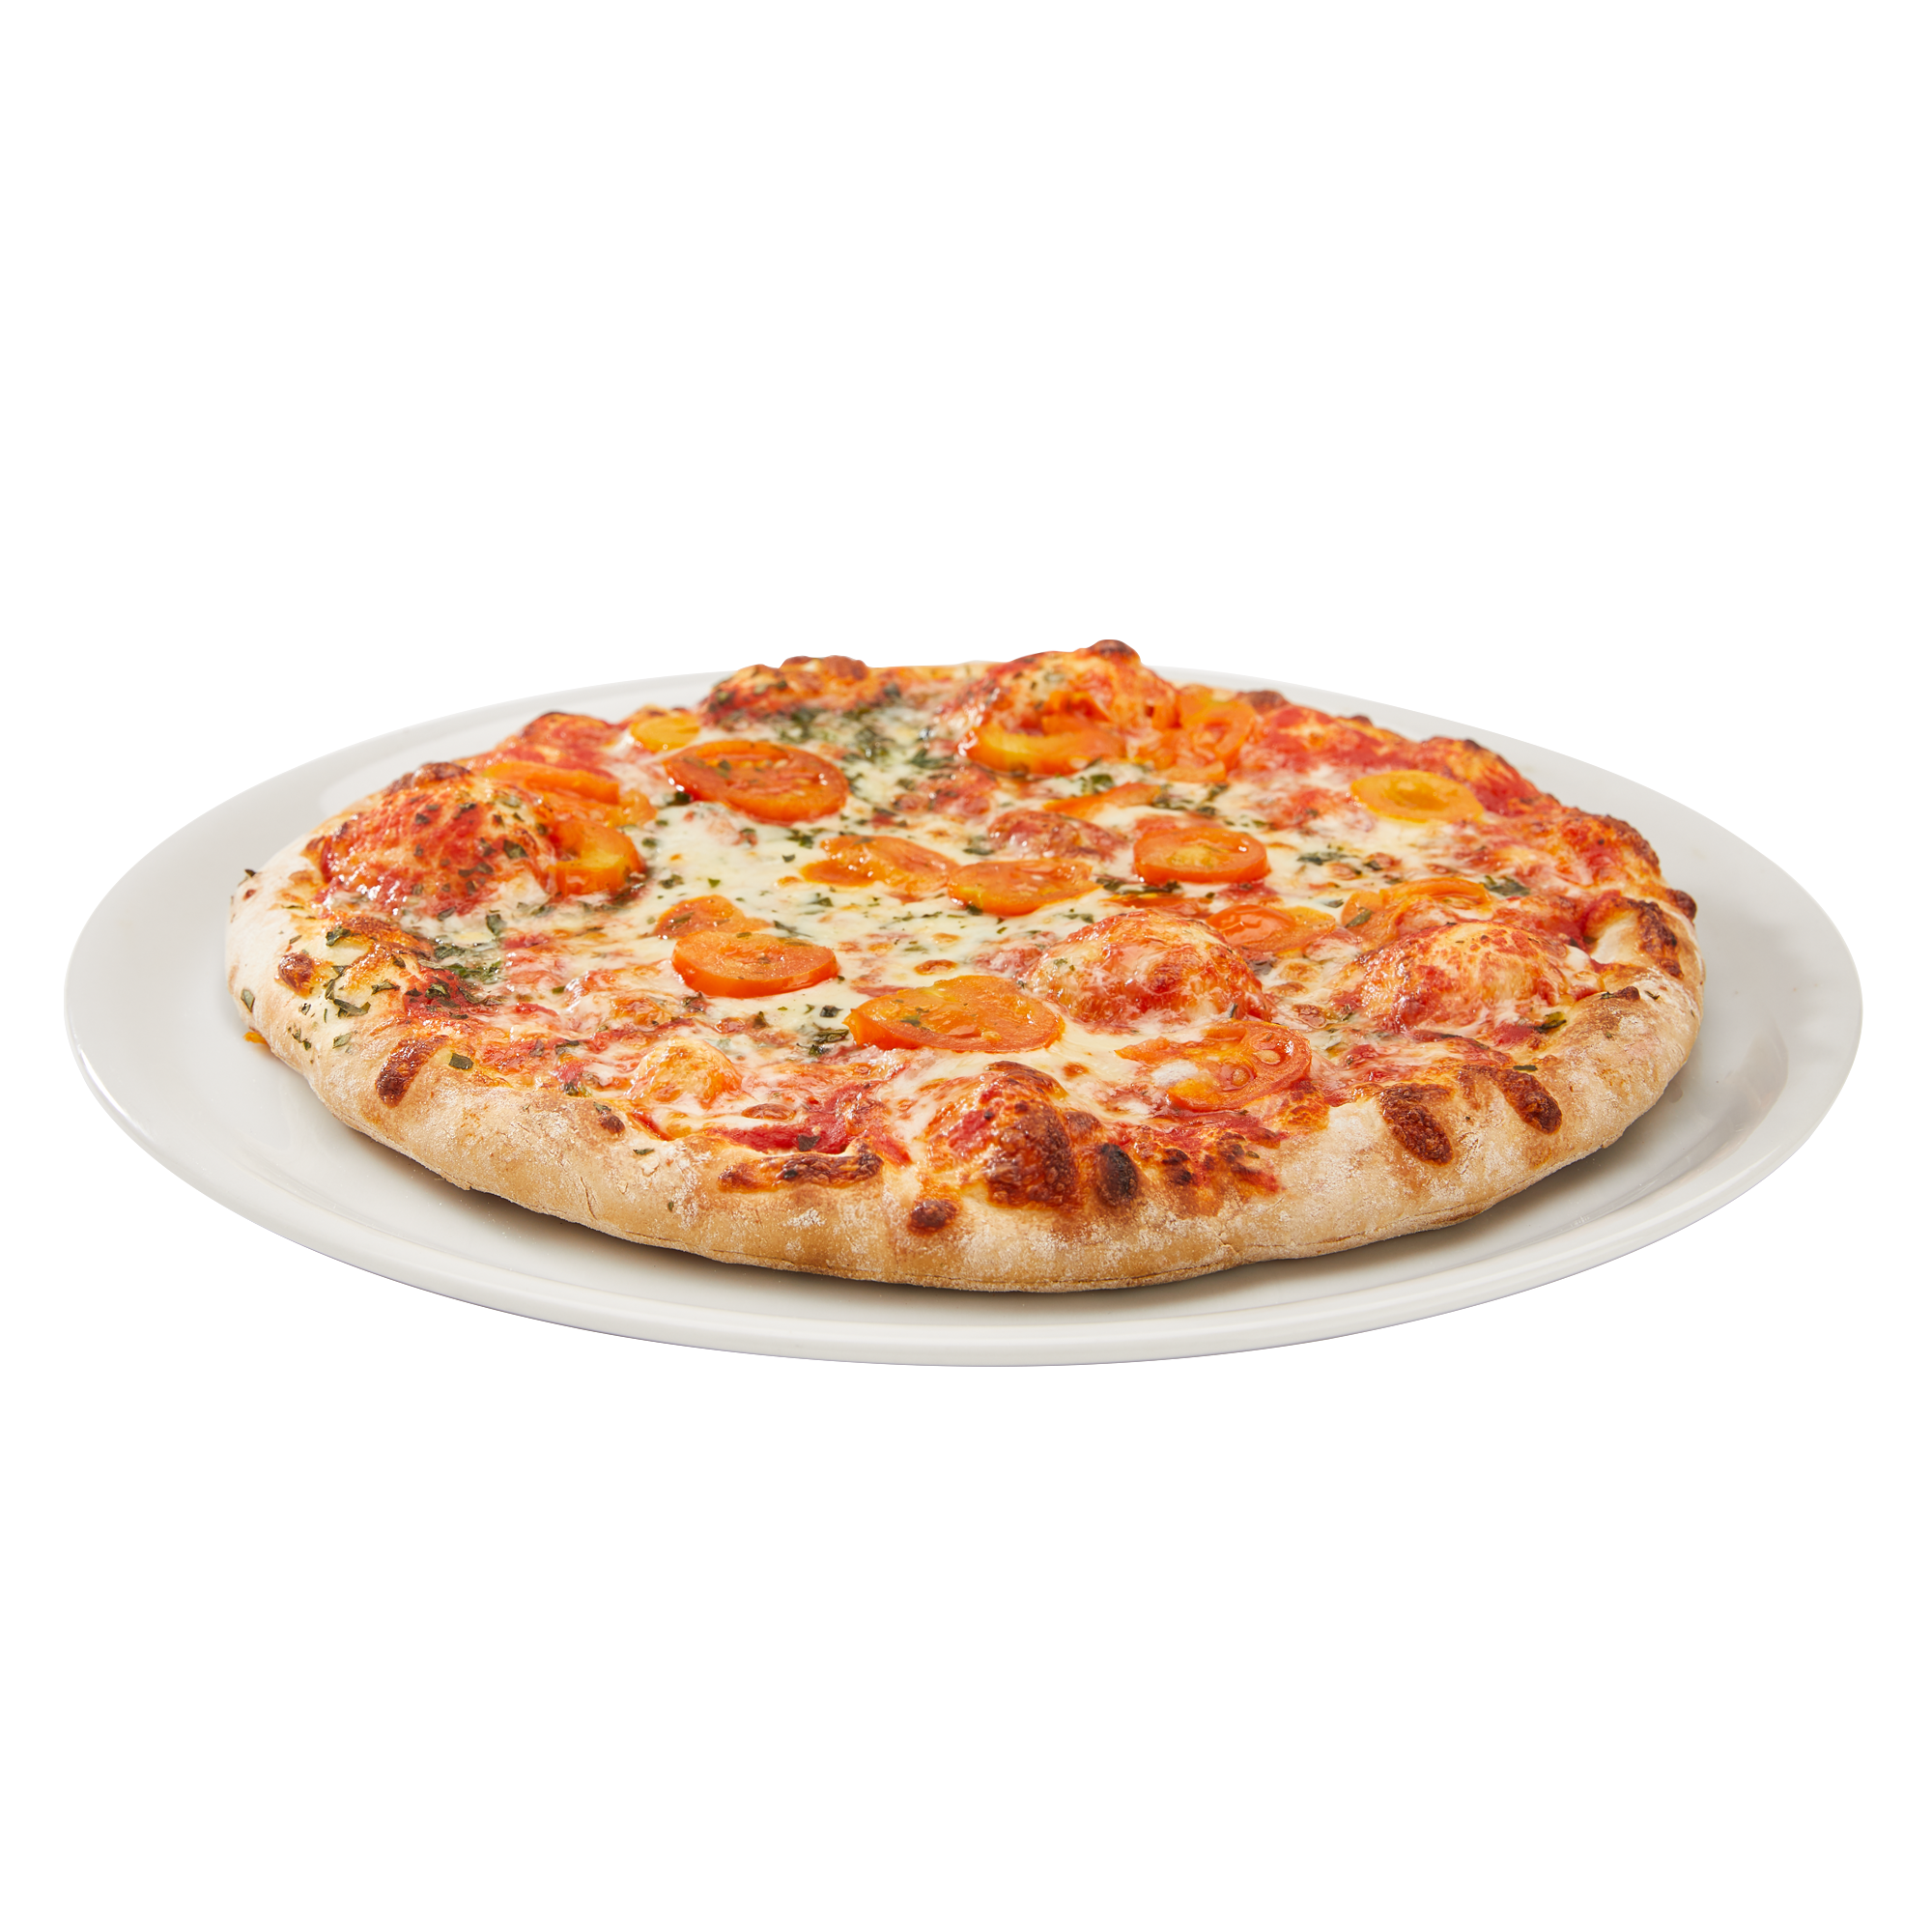 PREMIUM PIZZA “TOMATE-MOZZARELLA” 10 X 480G